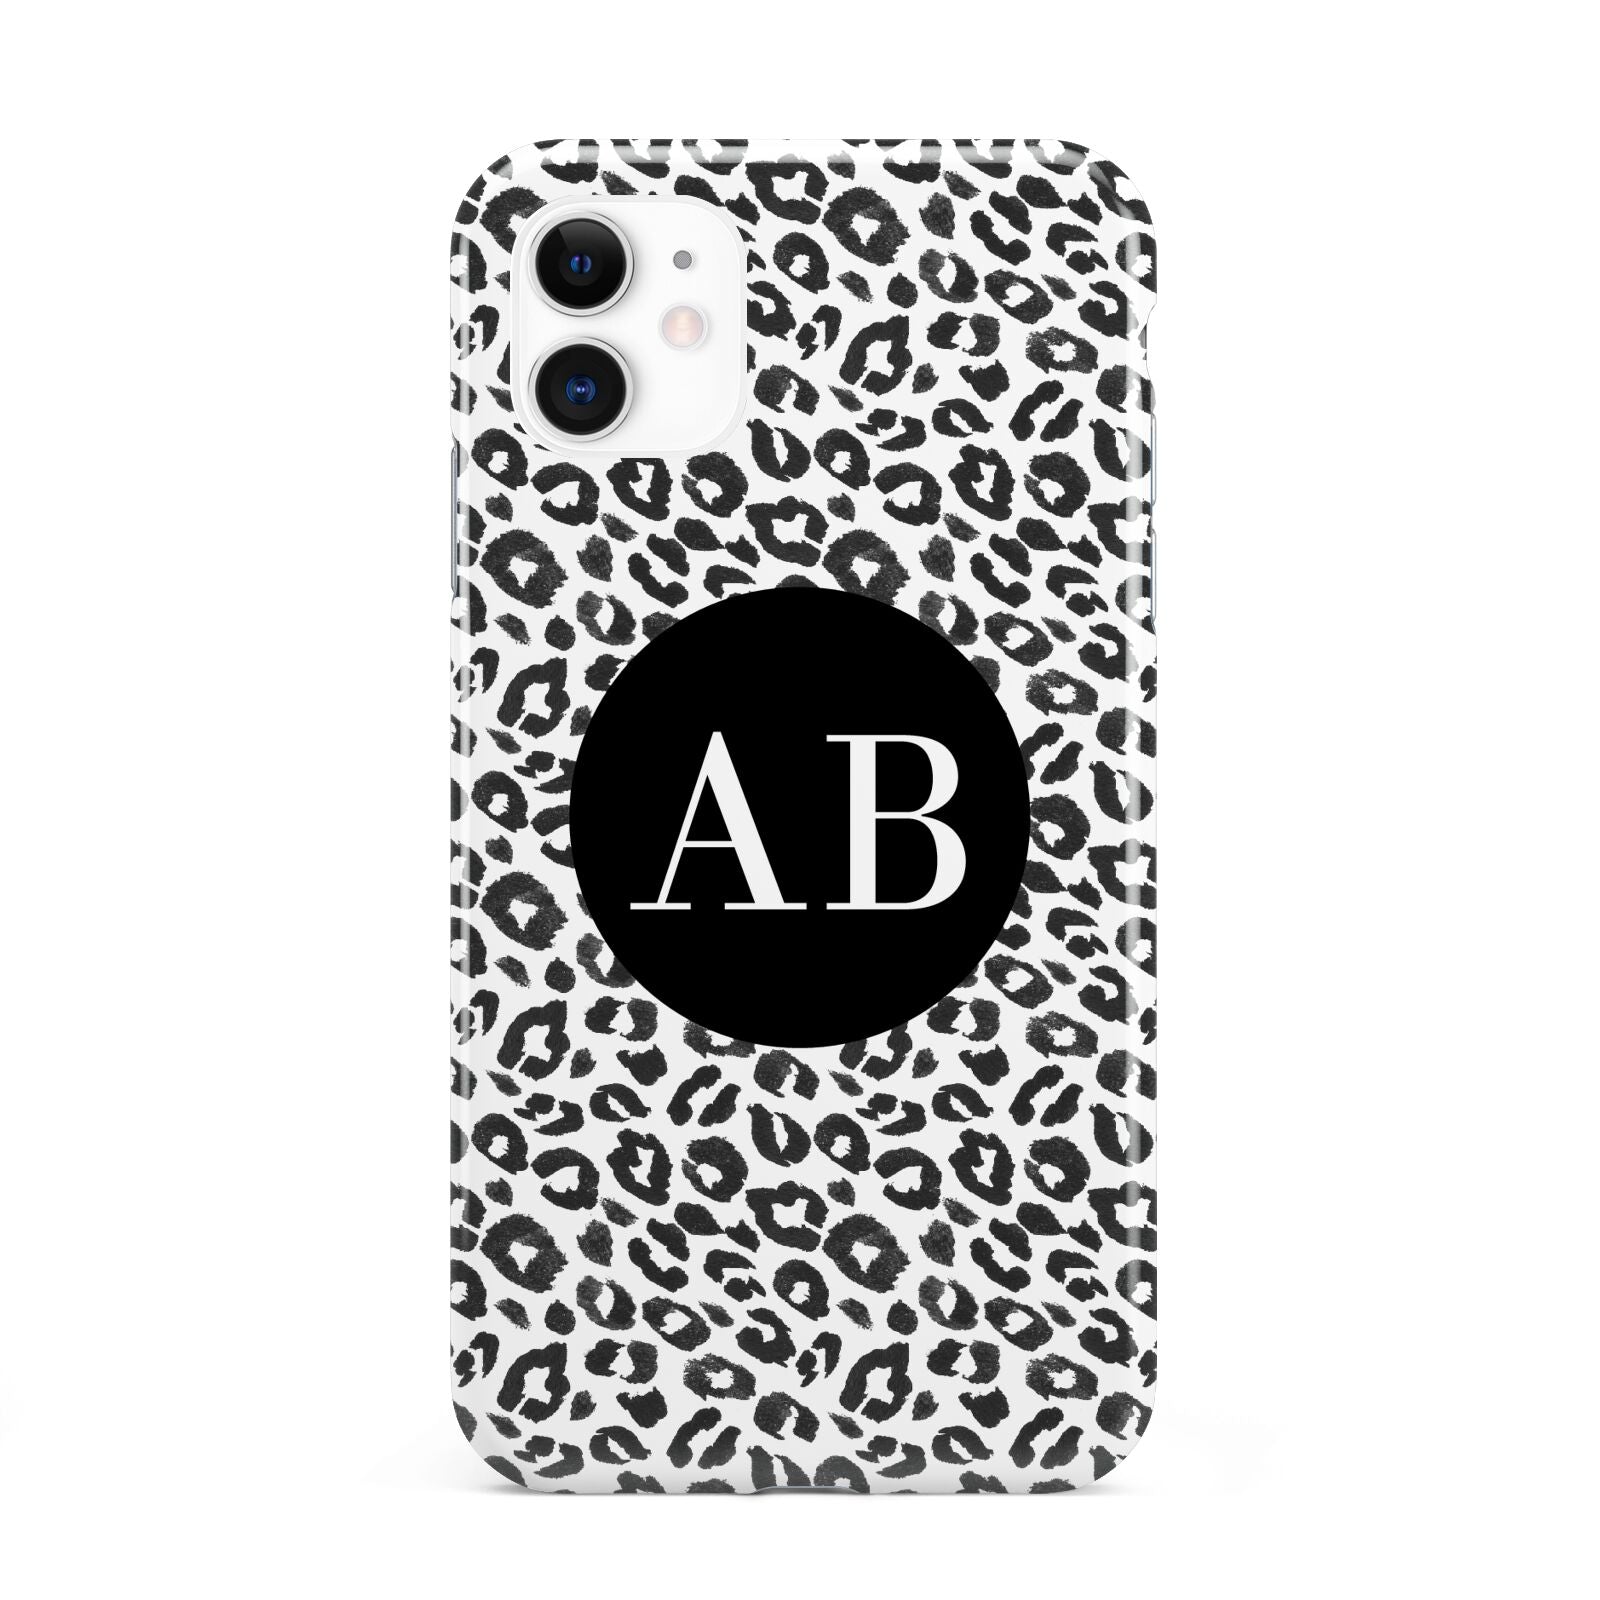 Leopard Print Black and White iPhone 11 3D Tough Case